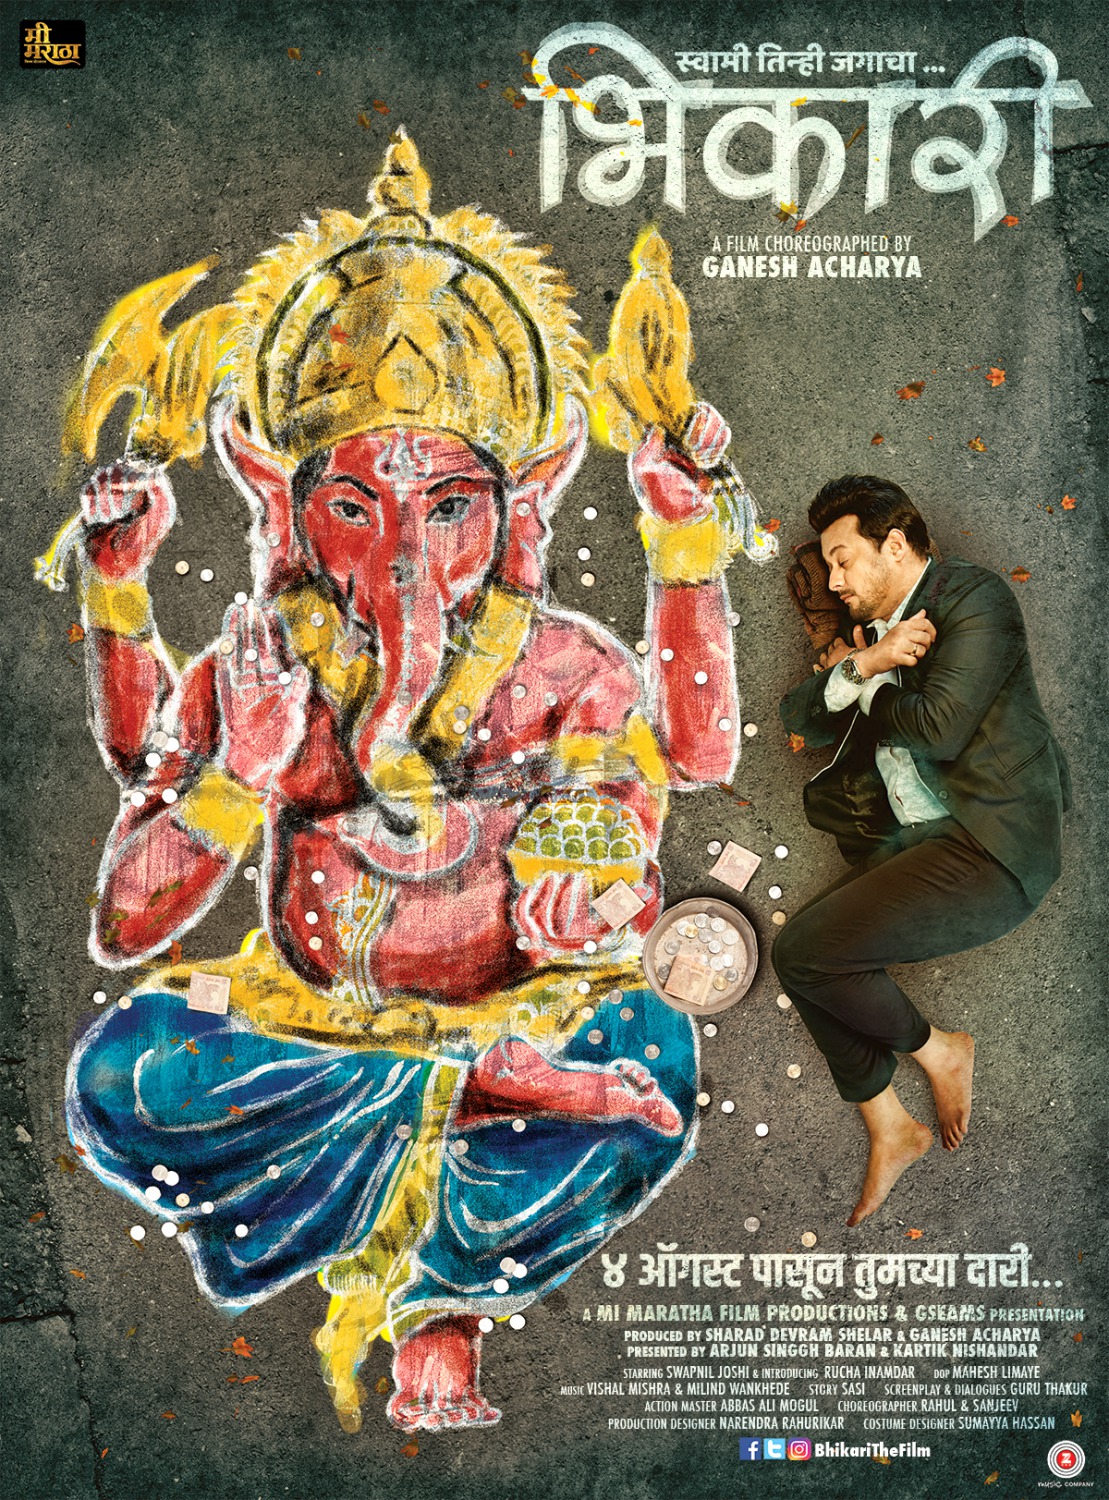 Extra Large Movie Poster Image for Bhikari (#2 of 2)